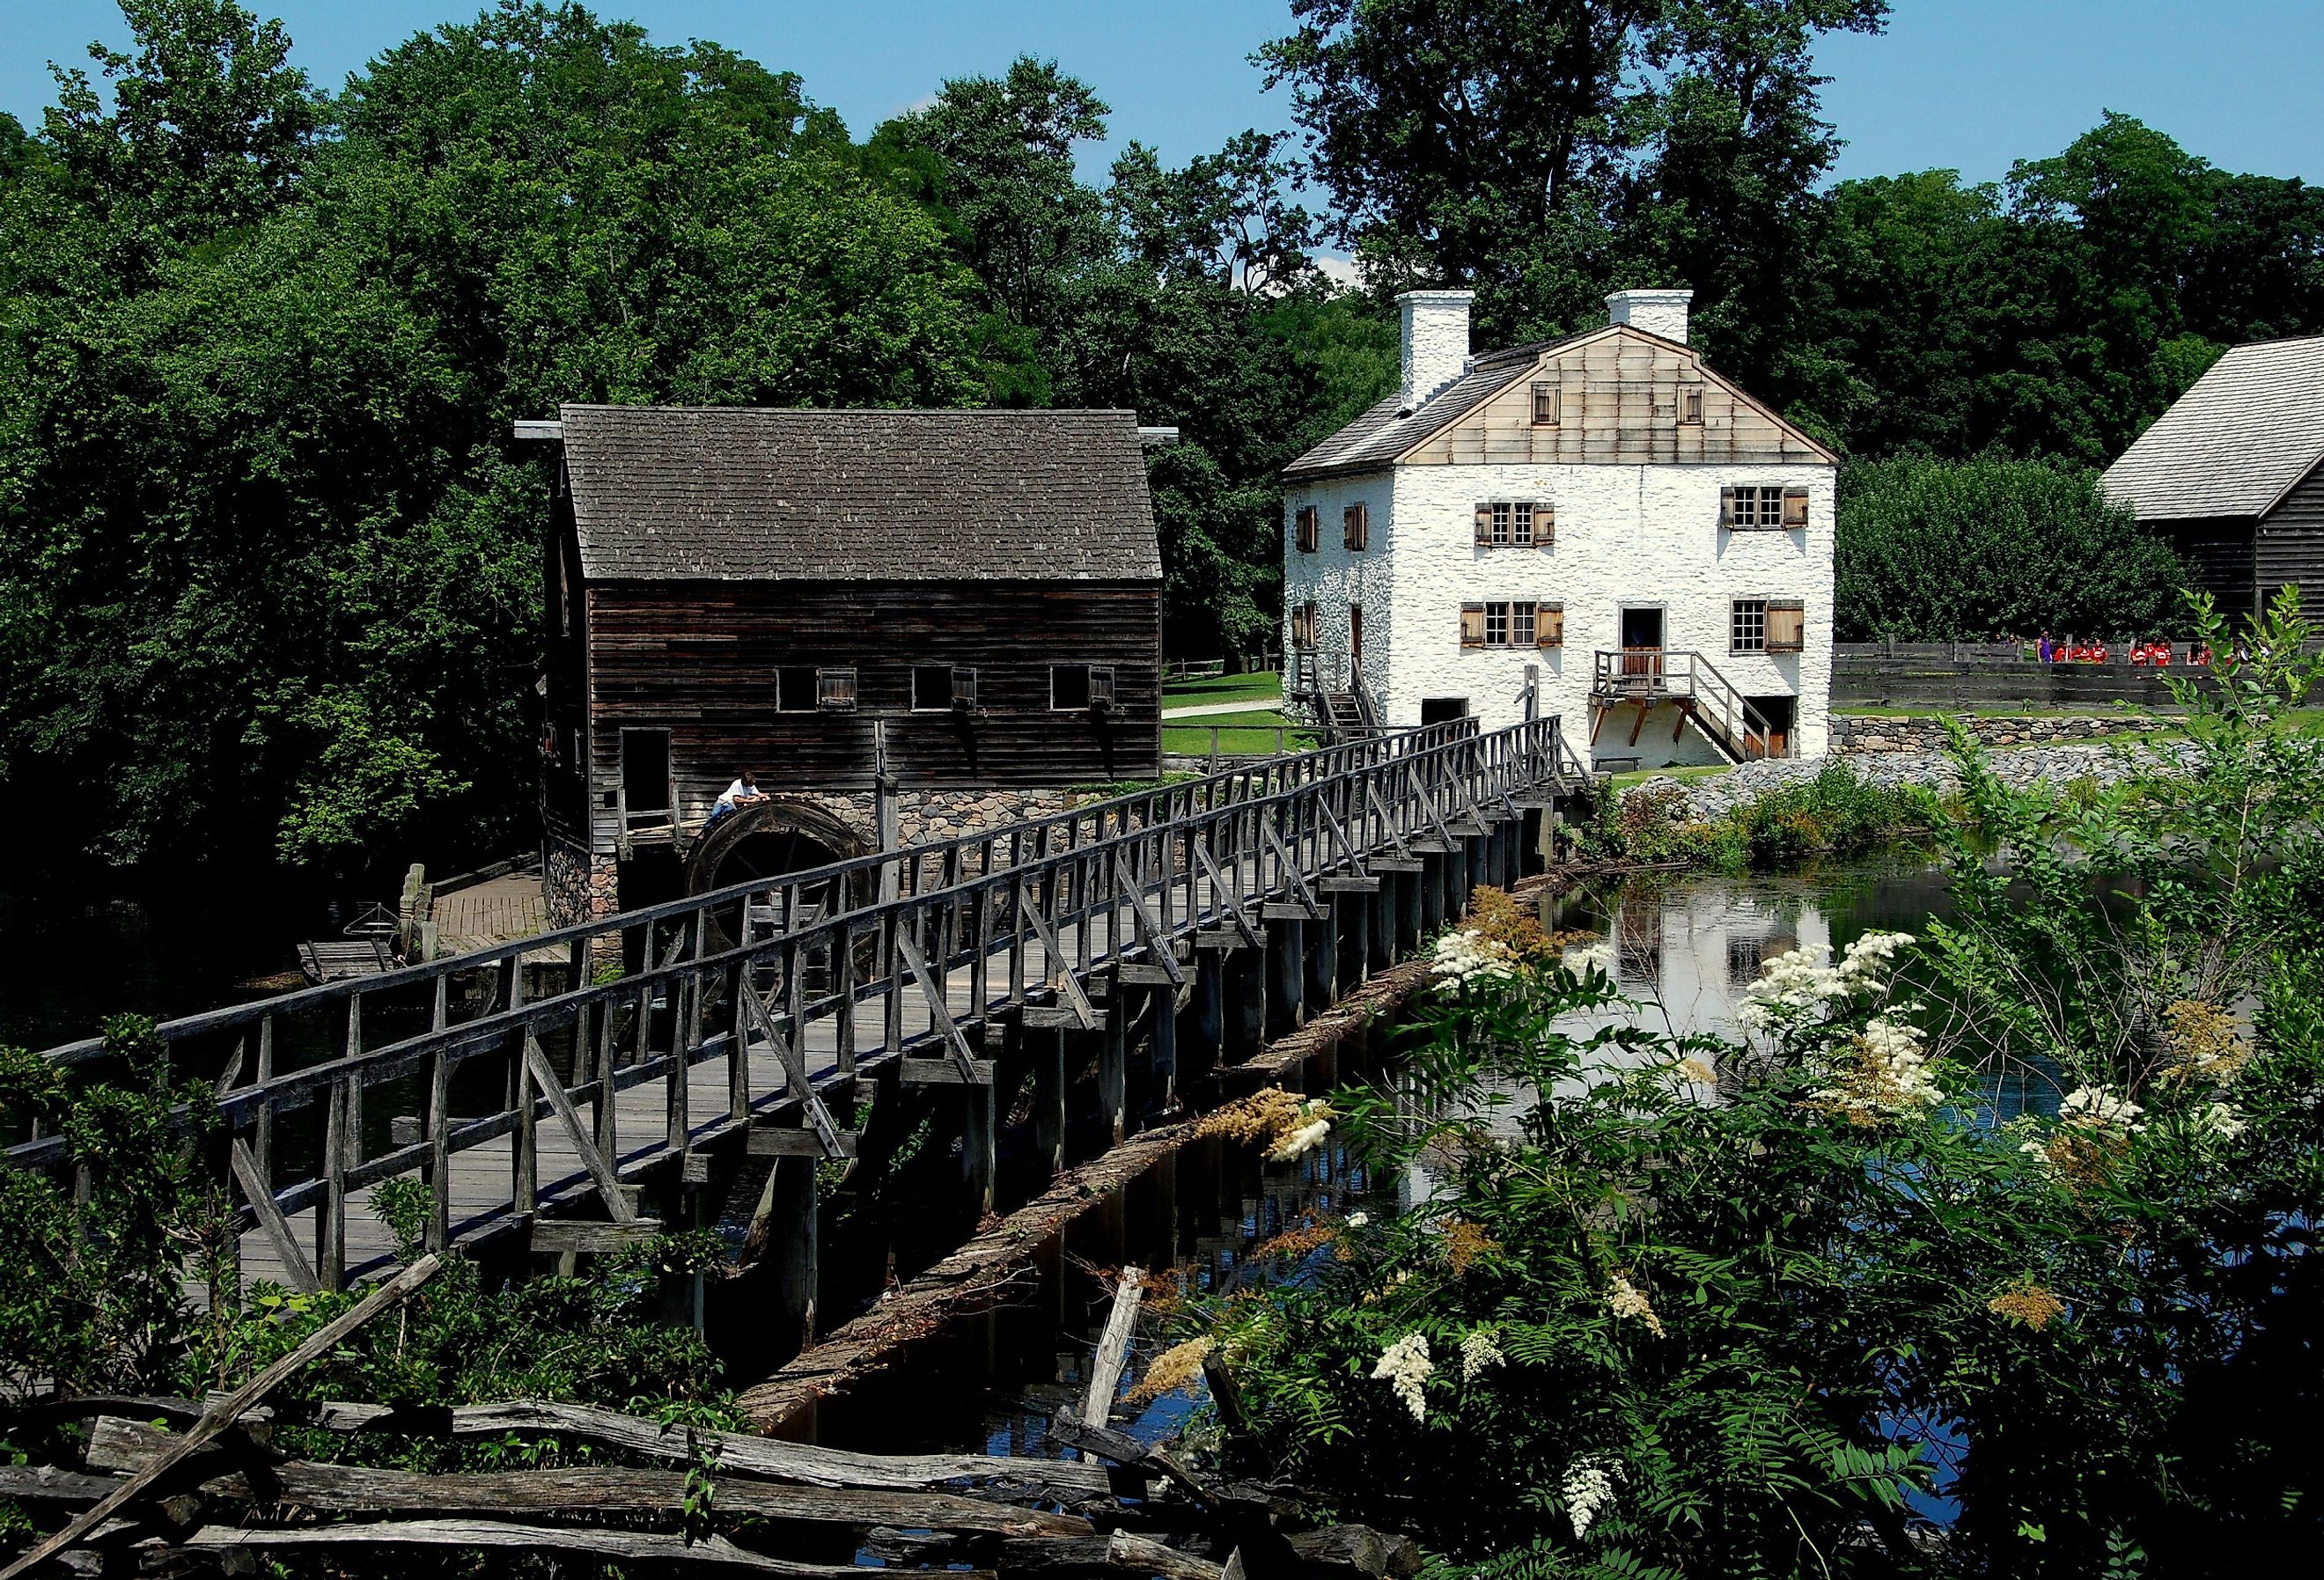 Mill Pond Bridge, wooden grist mill at Philipsburg Manor, Sleepy Hollow, New York. Image credit LEE SNIDER PHOTO IMAGES via Shutterstock